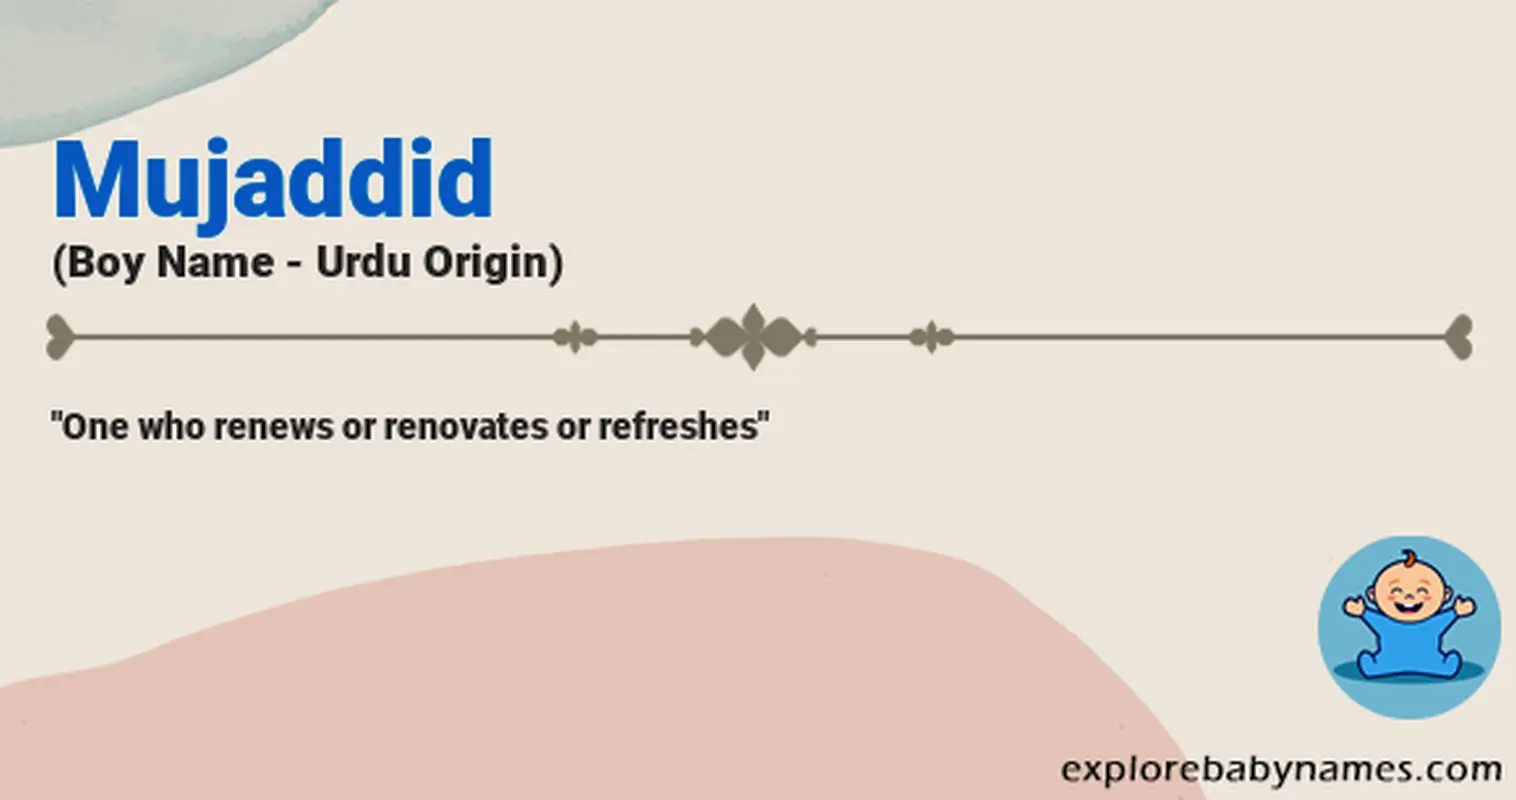 Meaning of Mujaddid